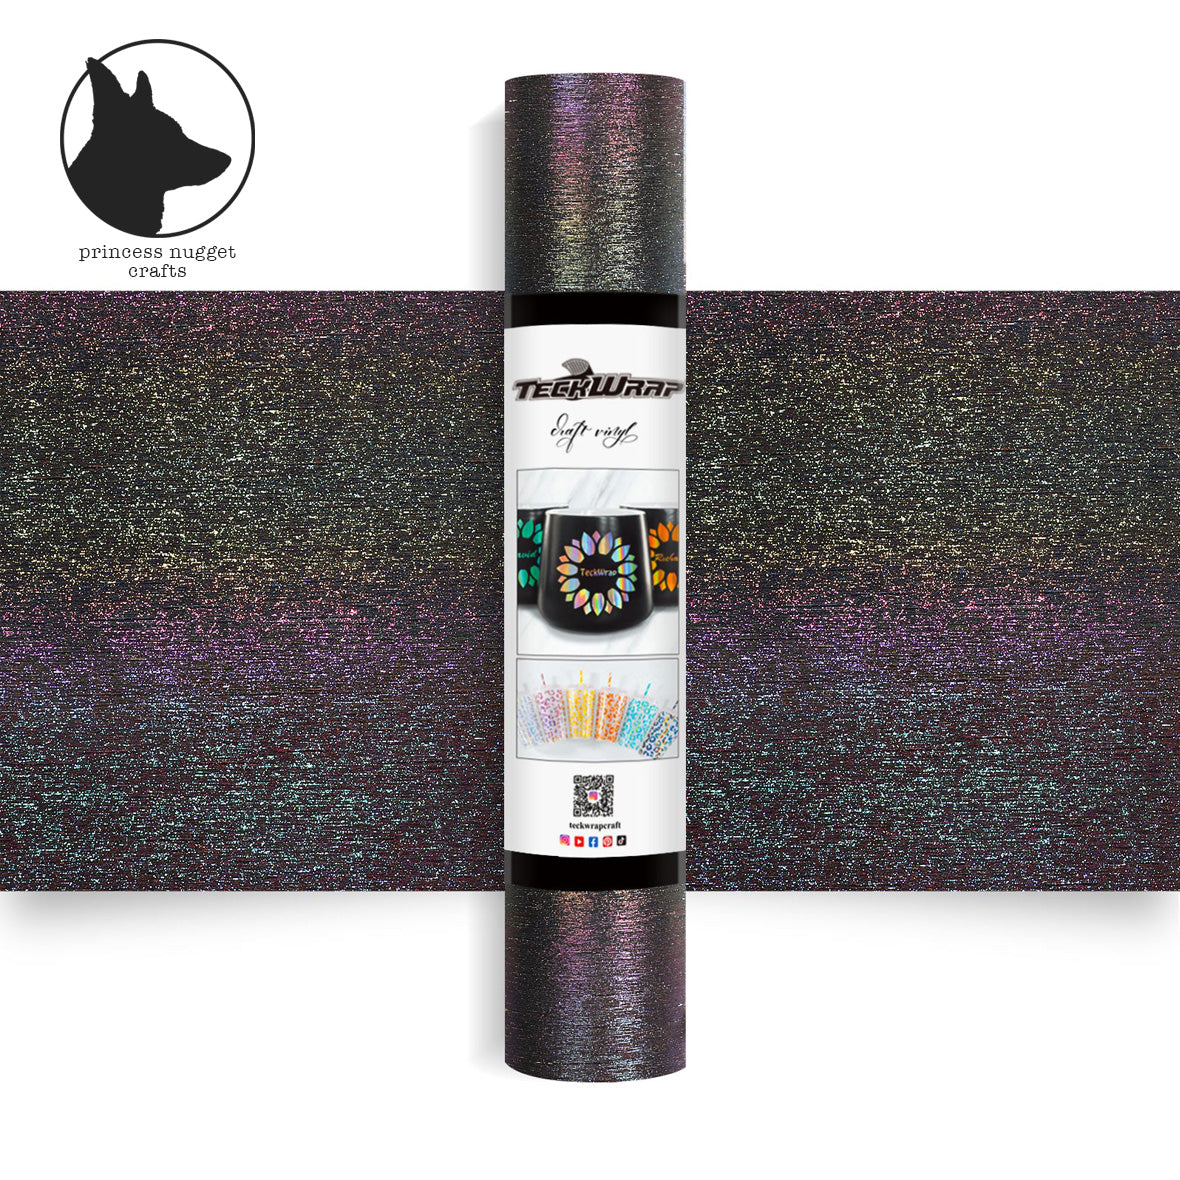 Glitter Brush Nebula Black vinyle - Princess Nugget crafts